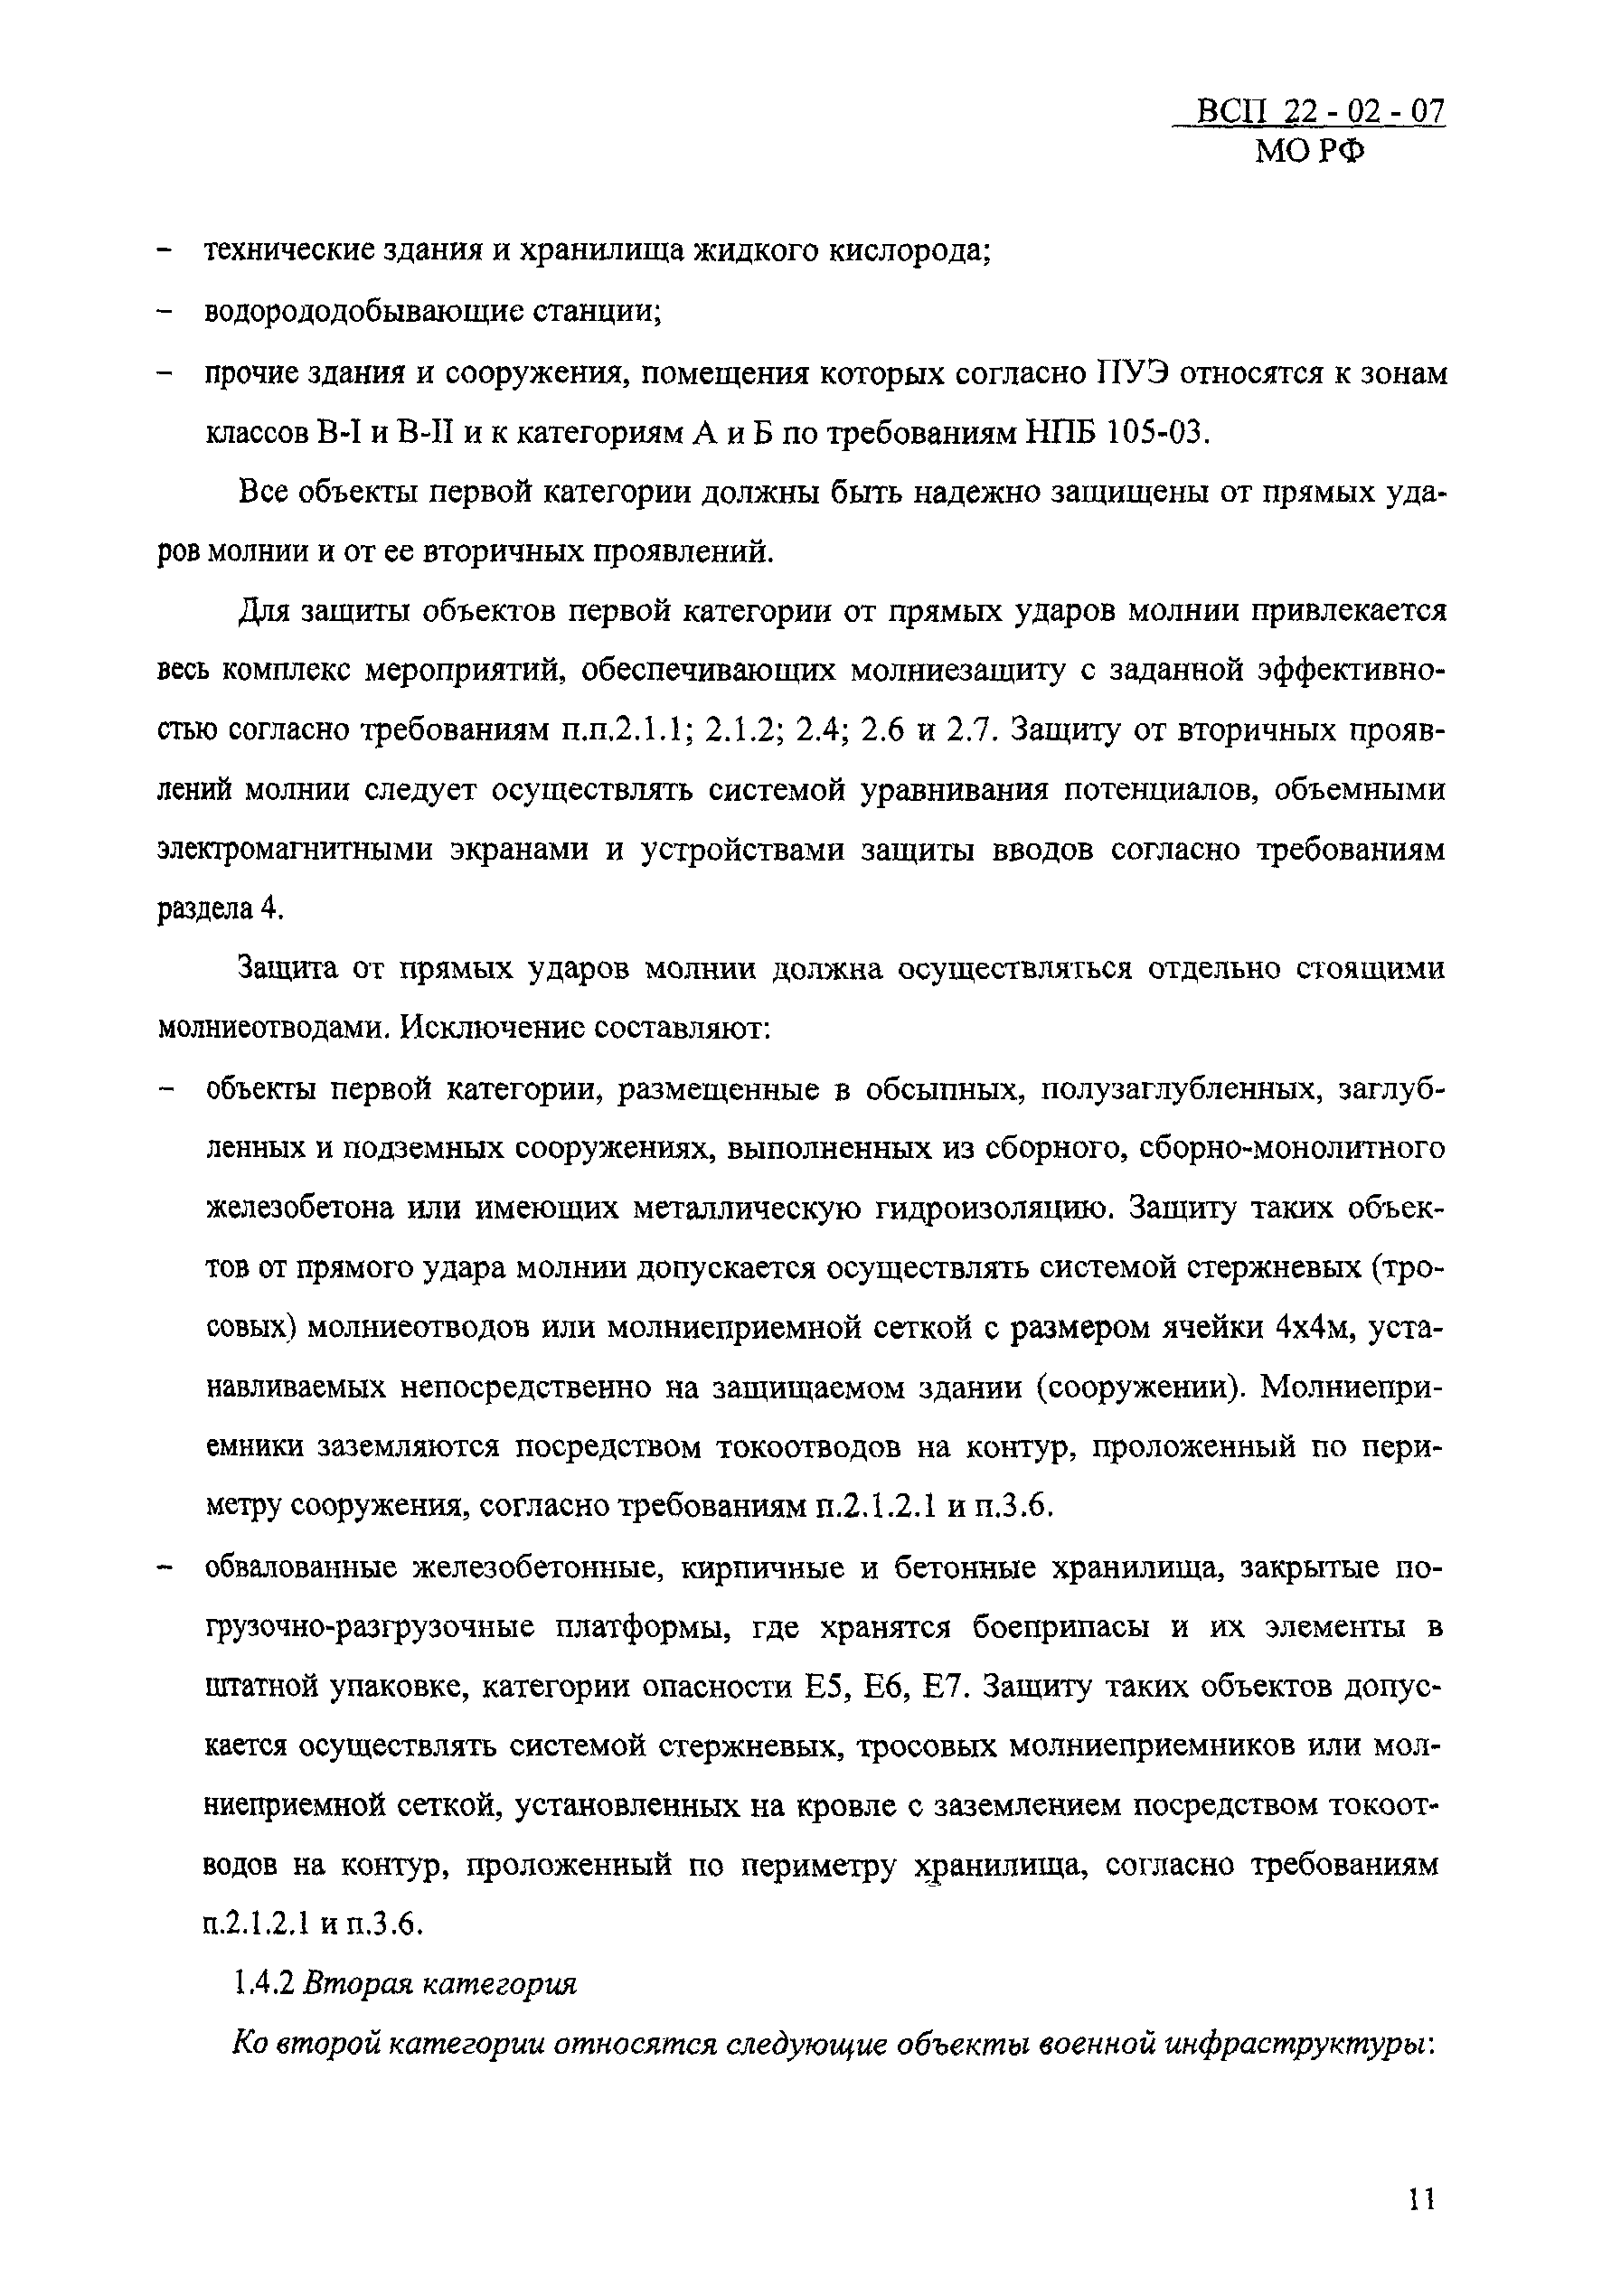 ВСП 22-02-07 МО РФ